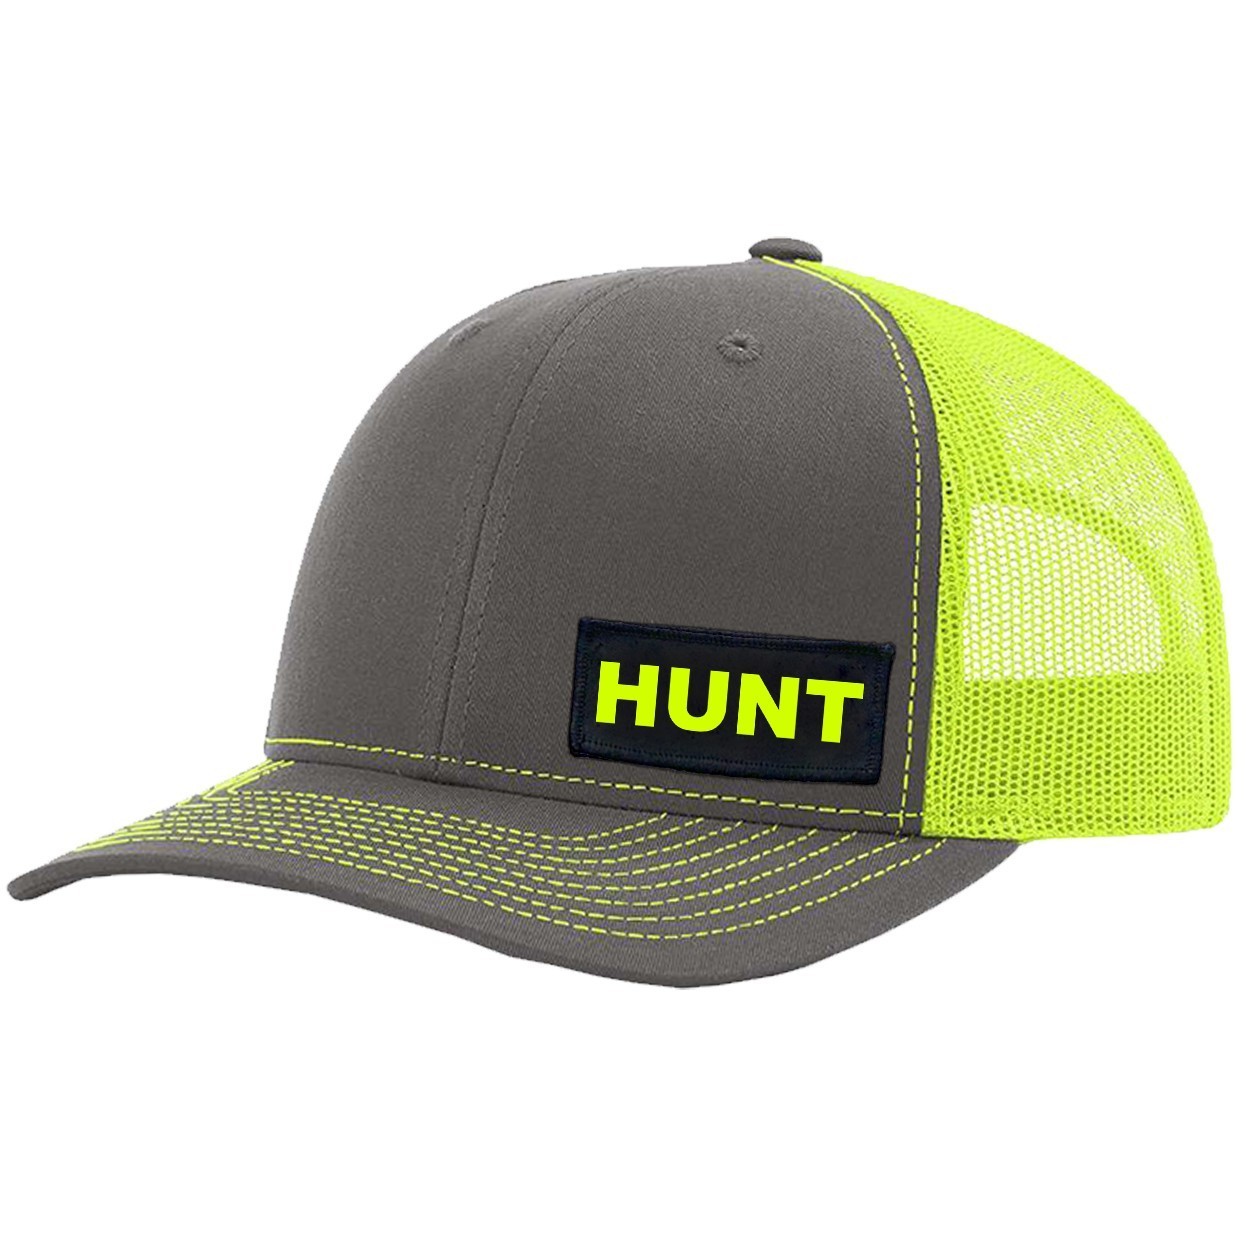 Hunt Brand Logo Night Out Woven Patch Snapback Trucker Hat Gray/Neon Yellow (Hi-Vis Logo)